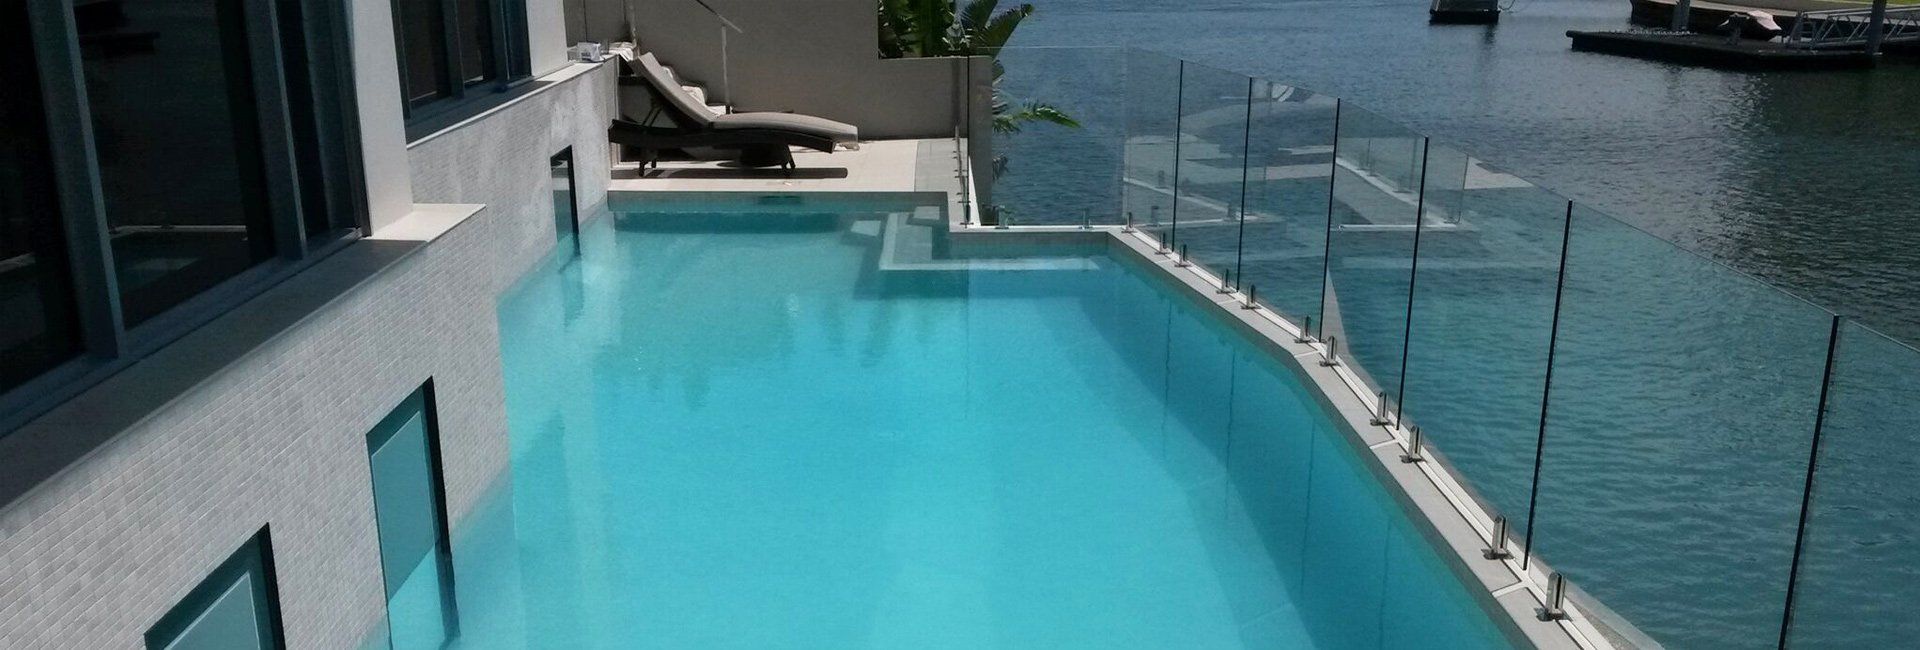 frameless pool fencing gold coast